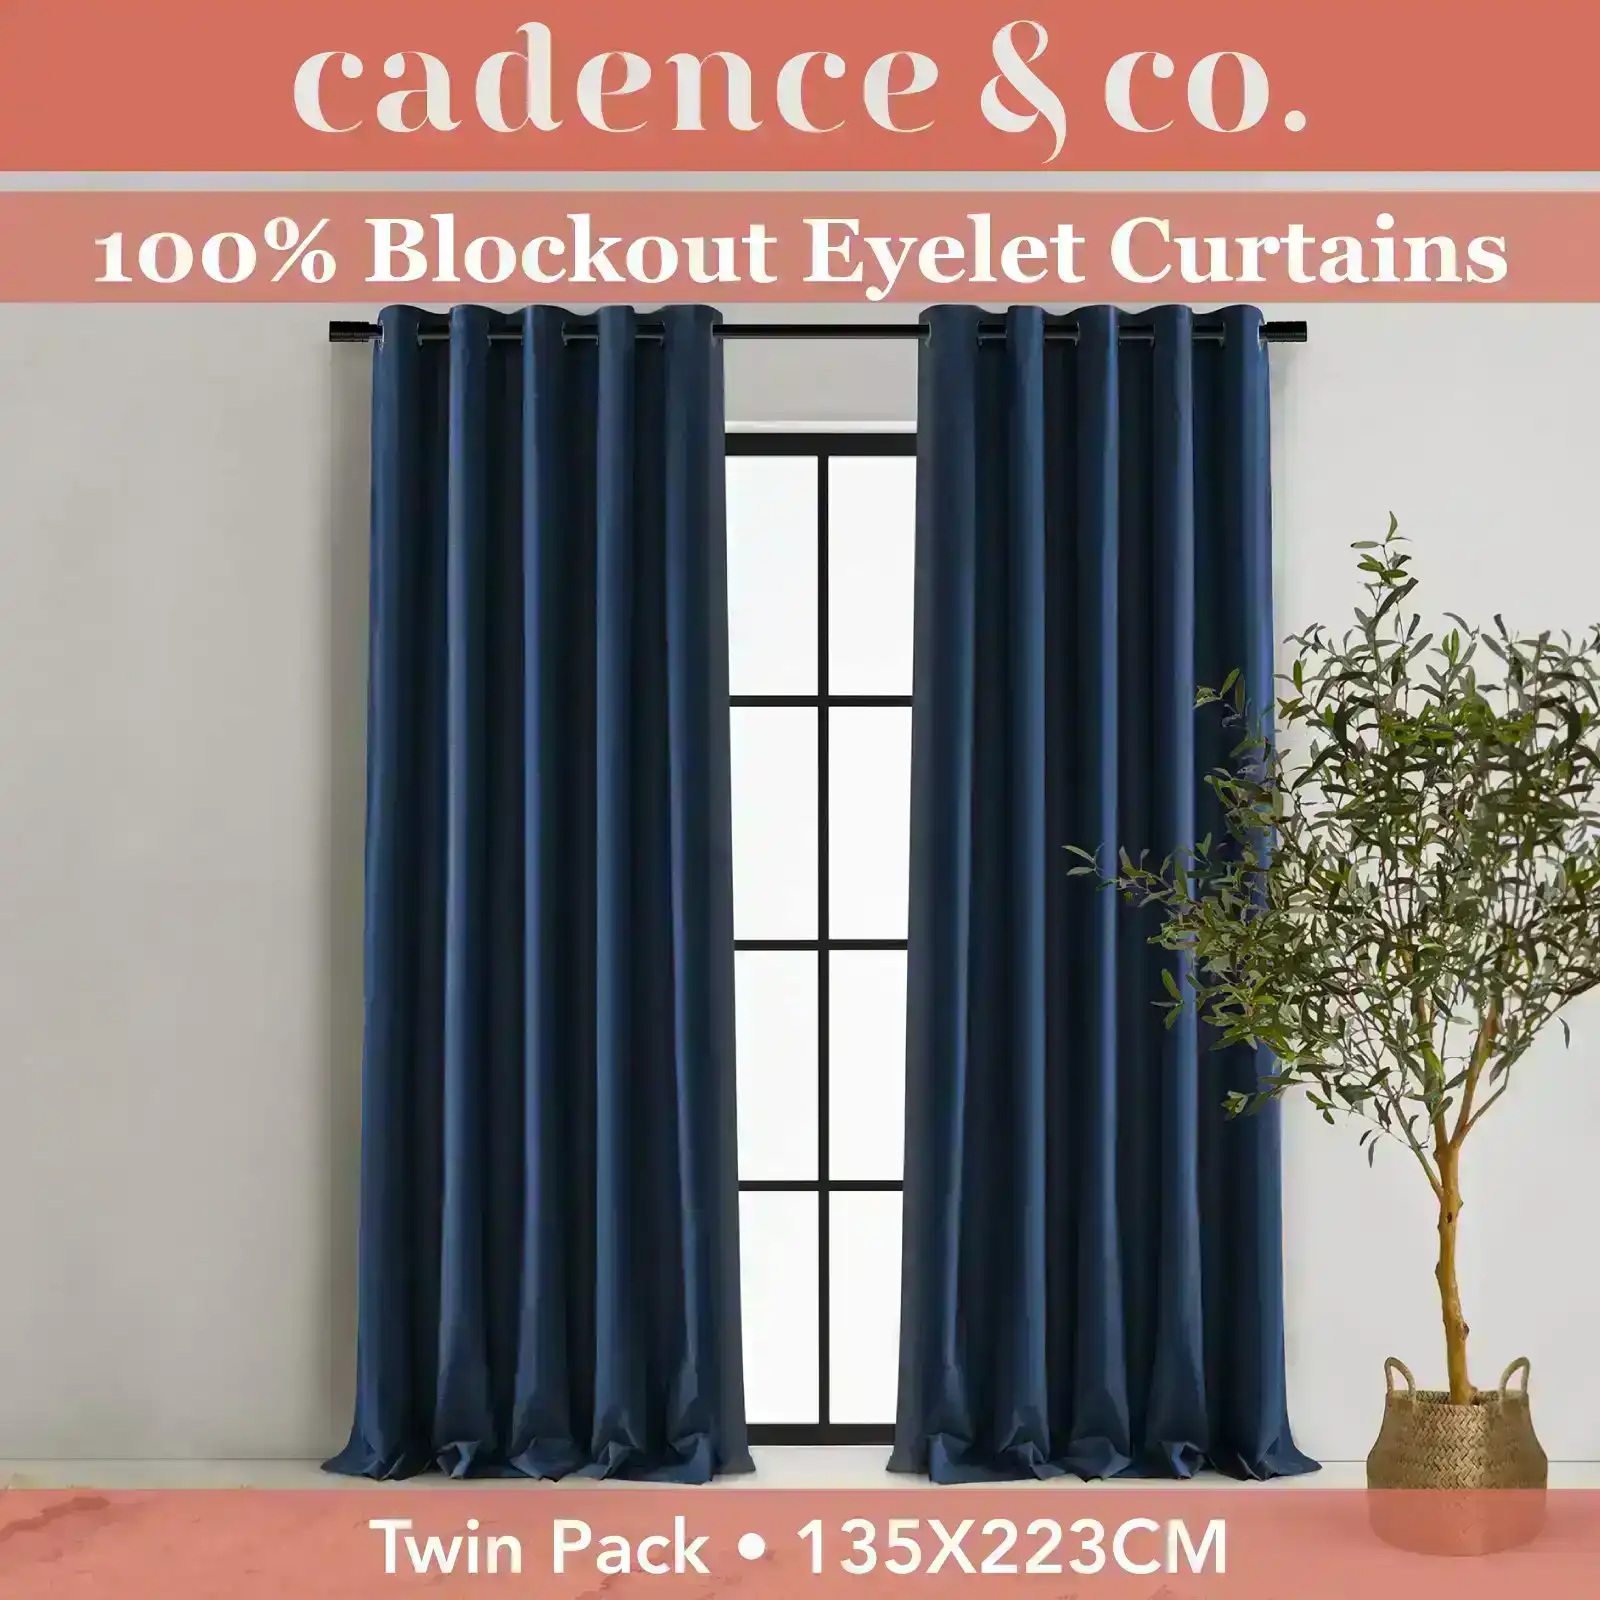 Cadence & Co Byron Matte Velvet 100% Blockout Eyelet Curtains Twin Pack Navy Blue 135x223cm